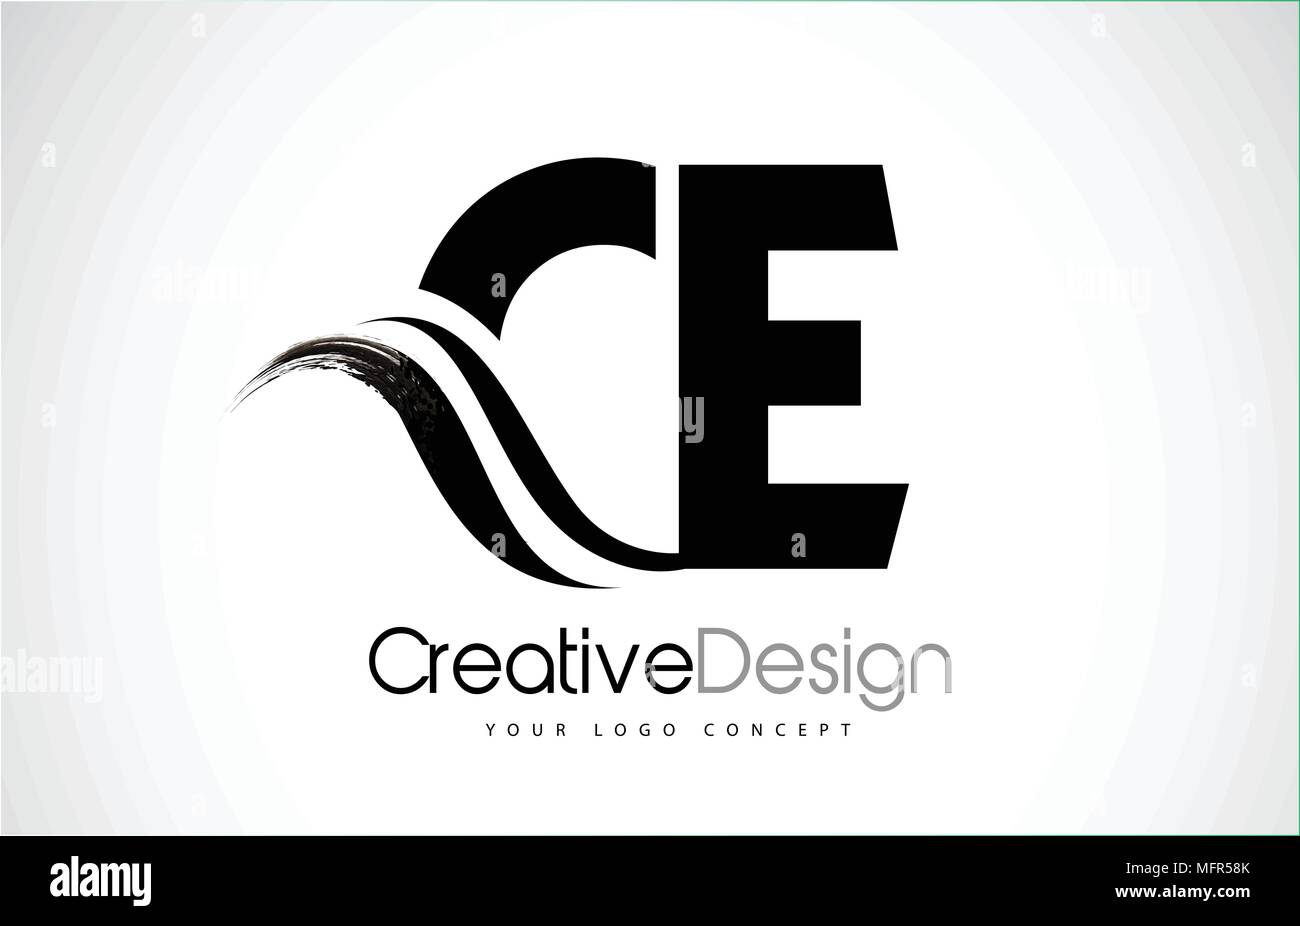 Ce C E Creative Modern Black Letters Logo Design With Brush Swoosh